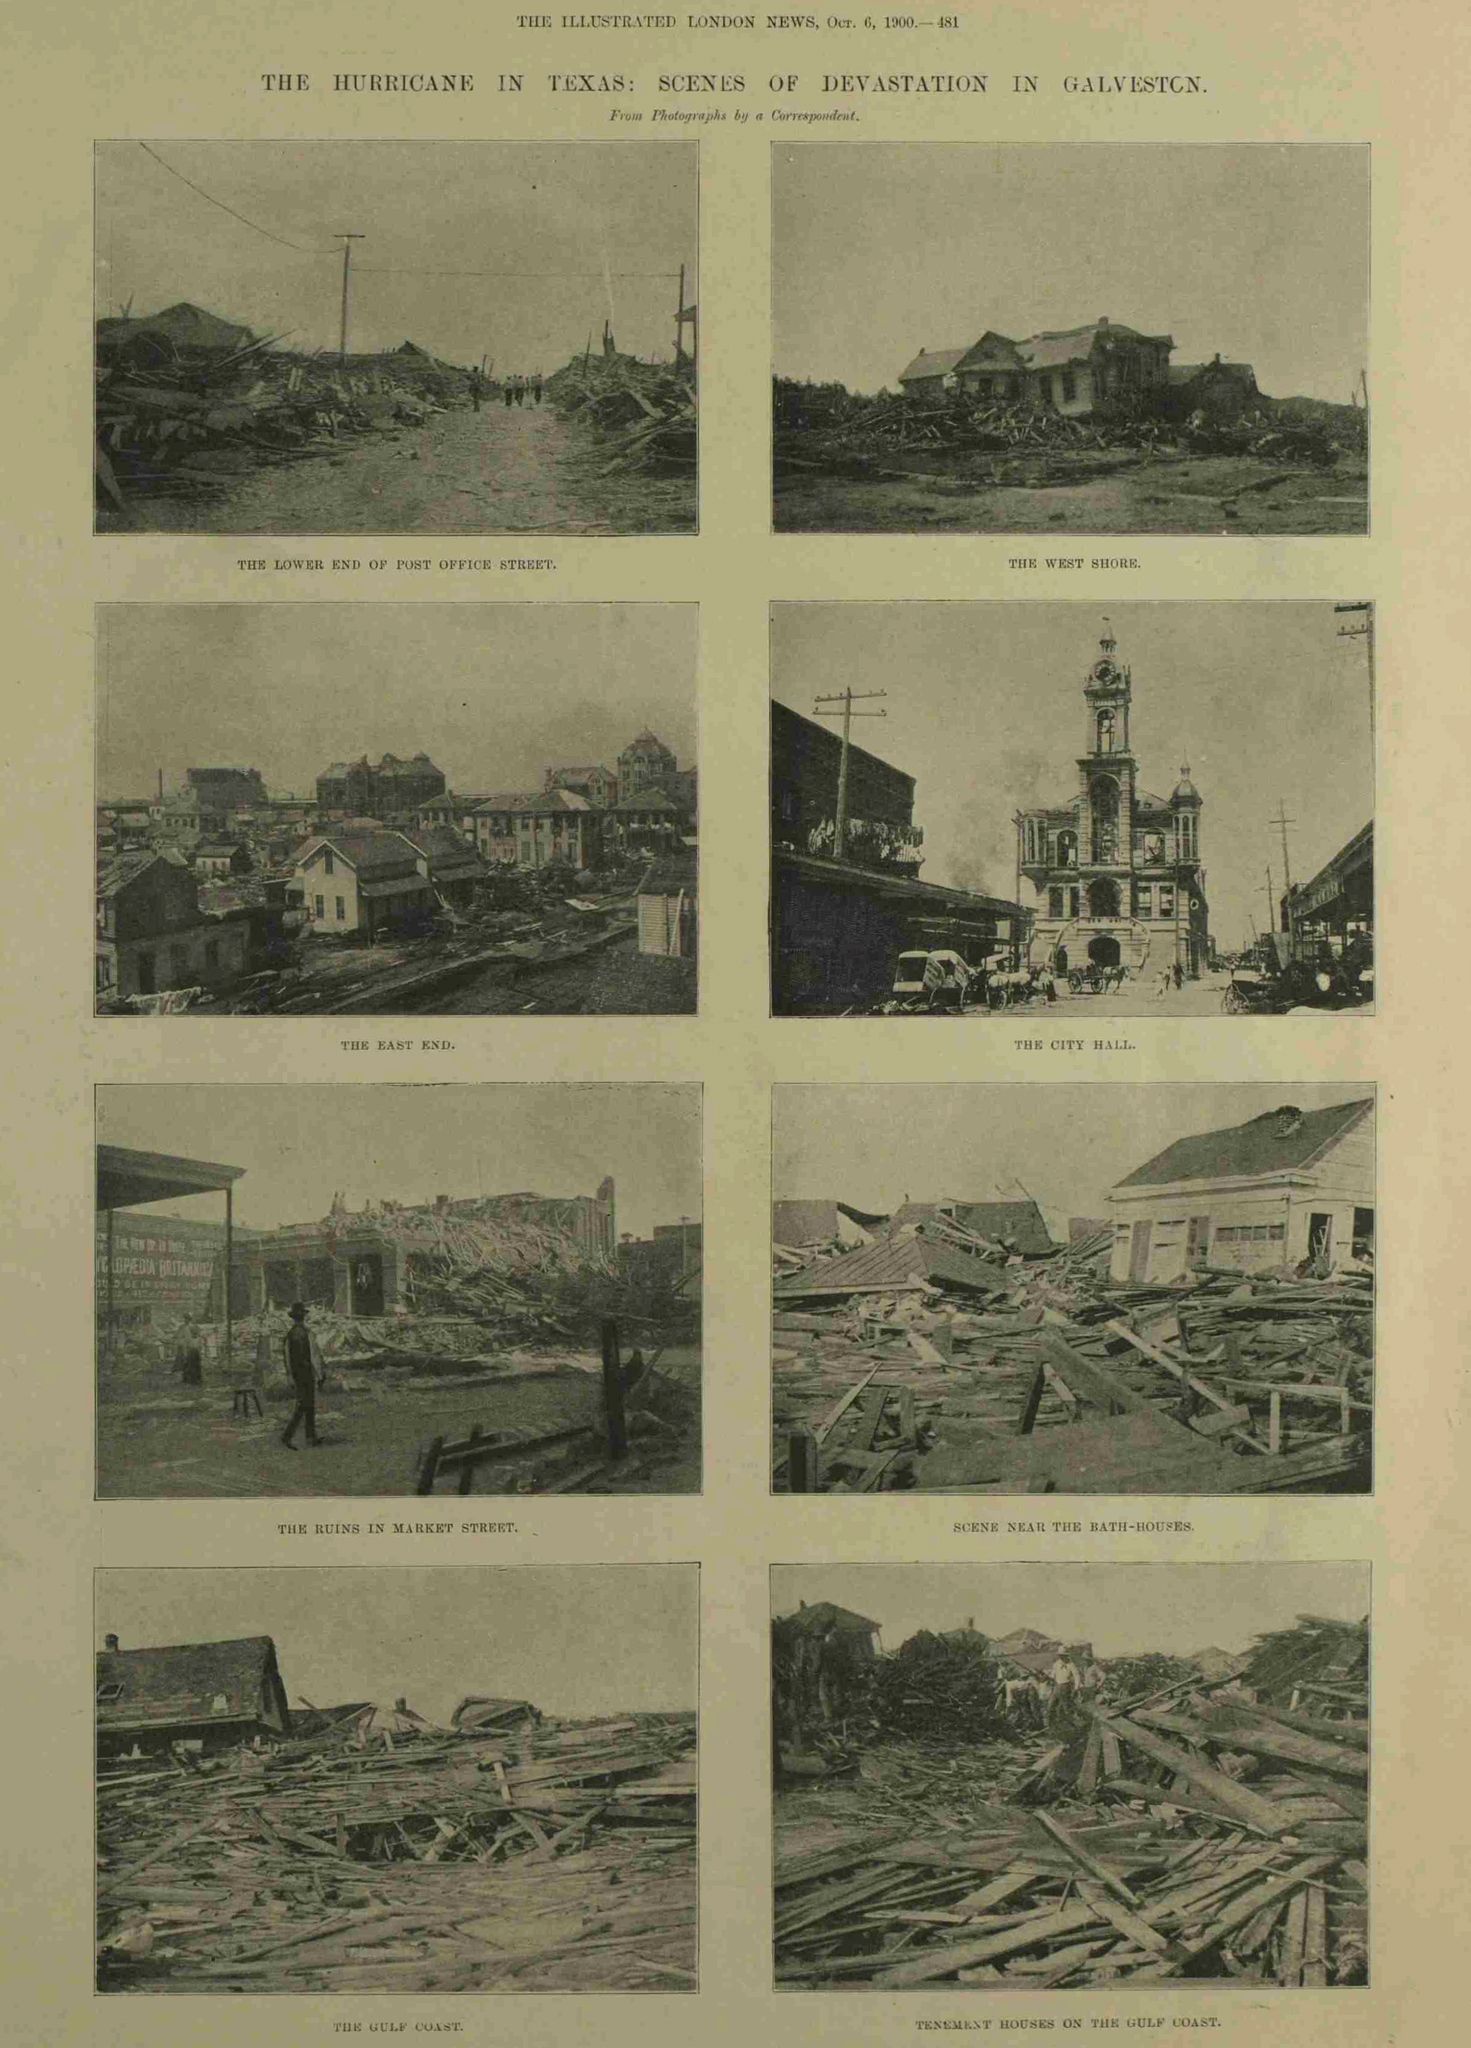 The Devastation of Galveston, Texas: 6th Oct 1900 Issue The Illustrated London News